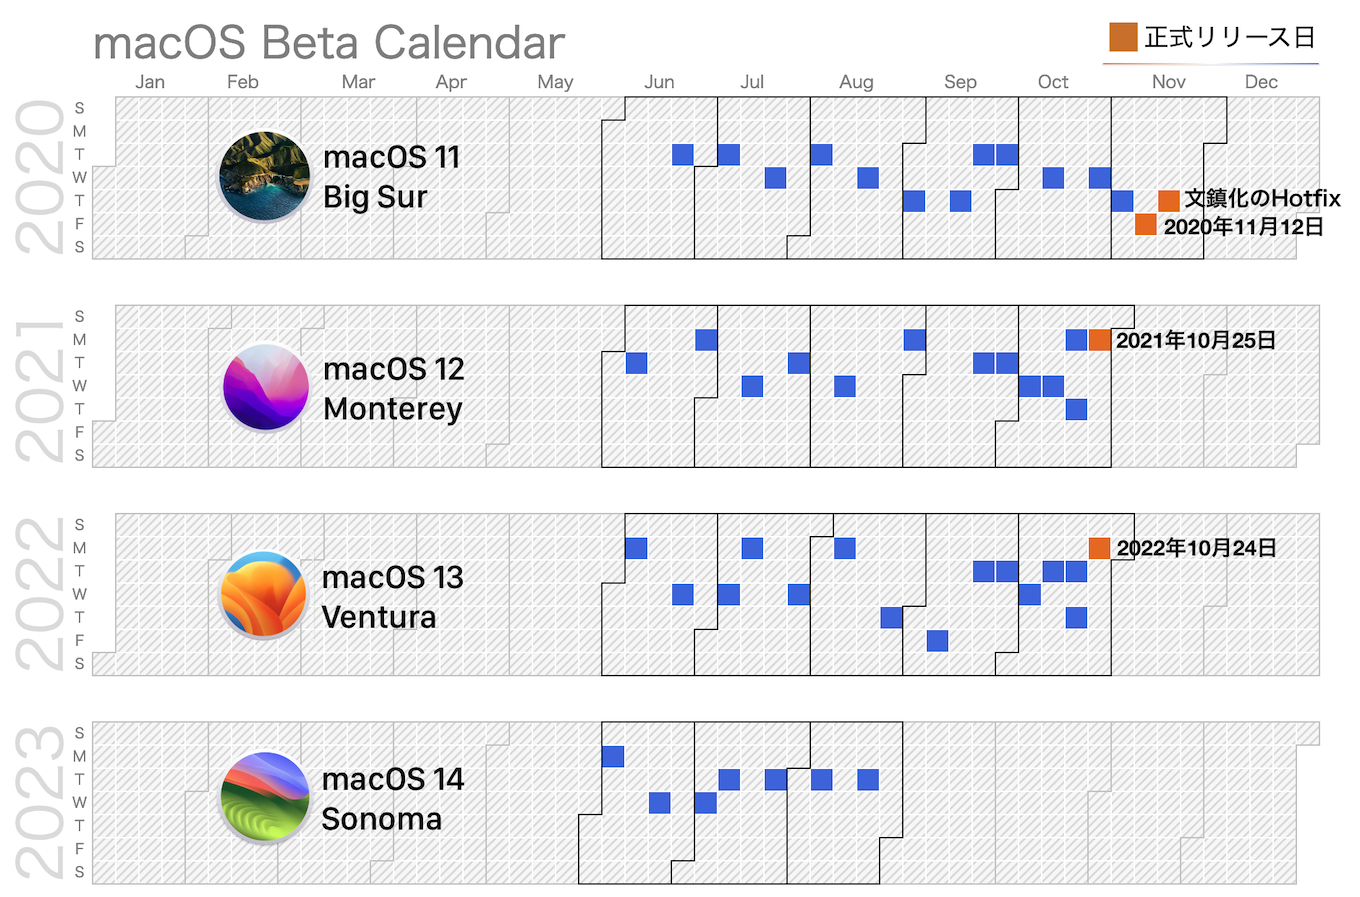 macOS 14 Sonoma Betaカレンダー